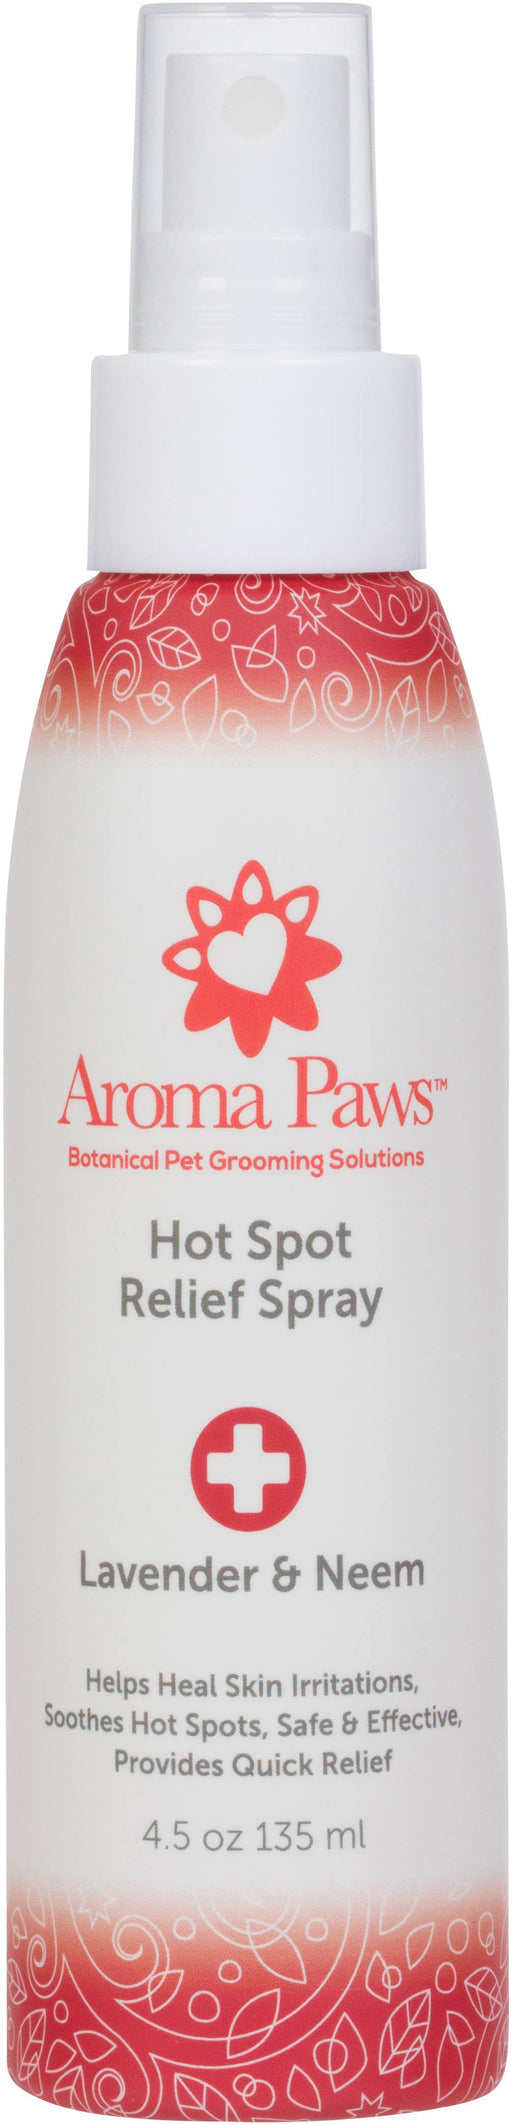 4.5 Oz Hot Spot Relief Spray